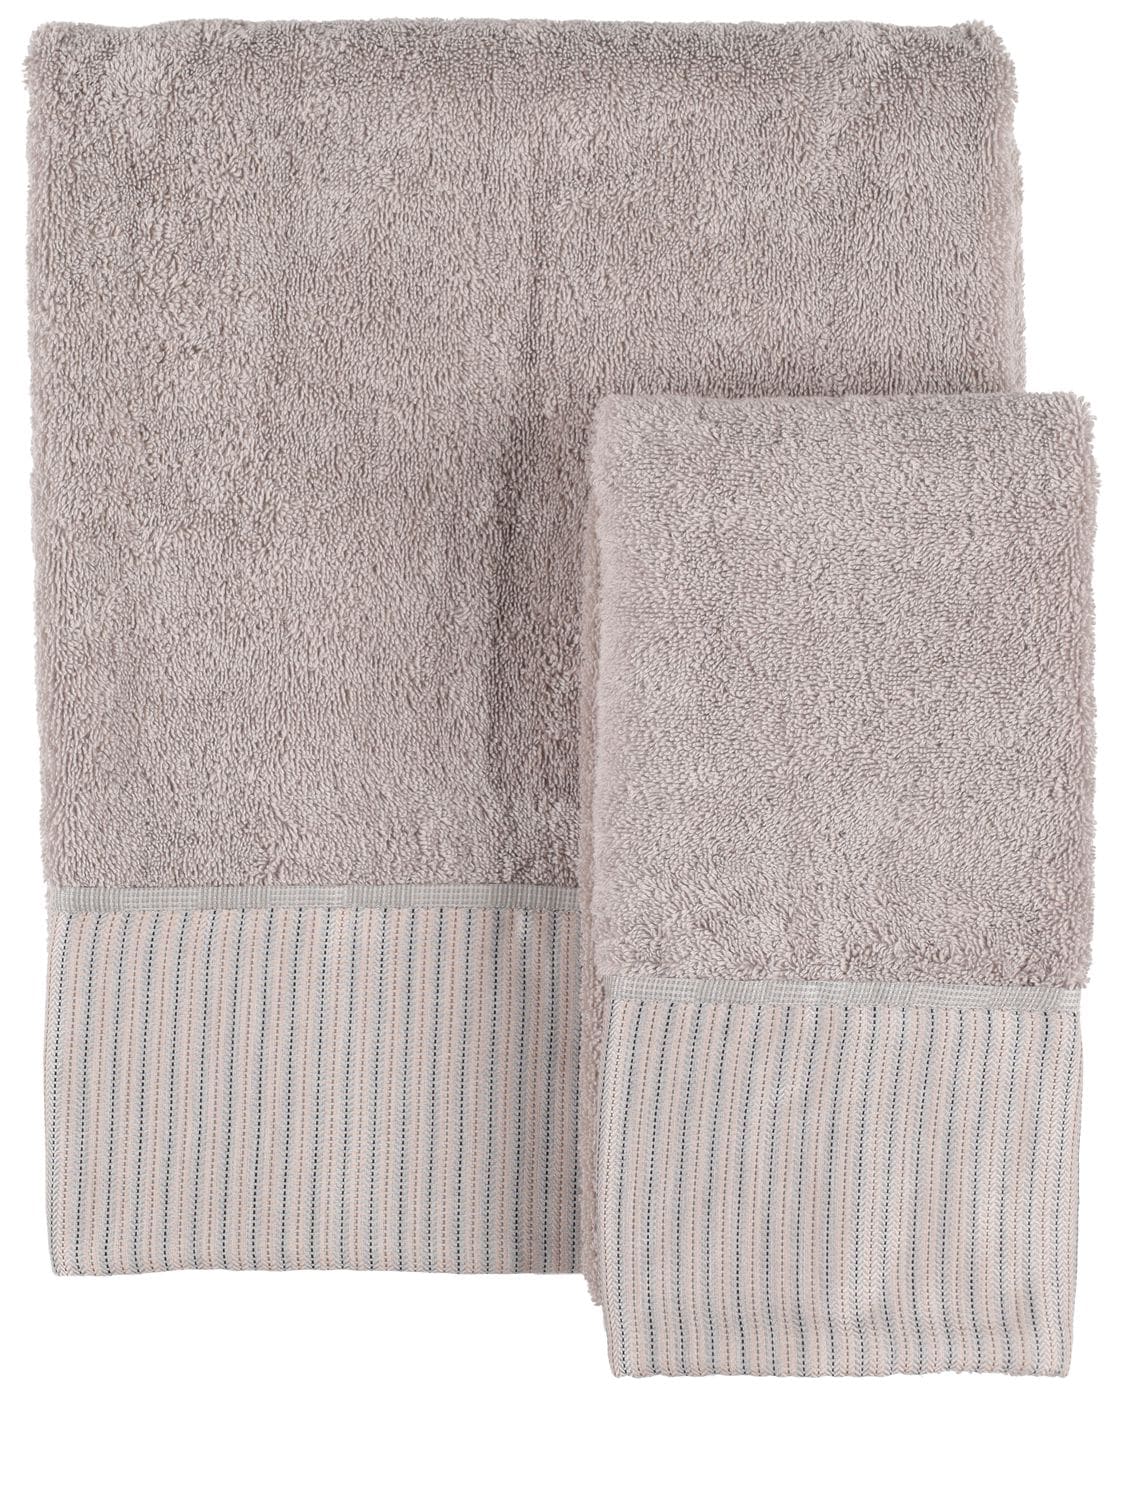 Armani/casa Petty Set Of 2 Cotton Towels In Tortora